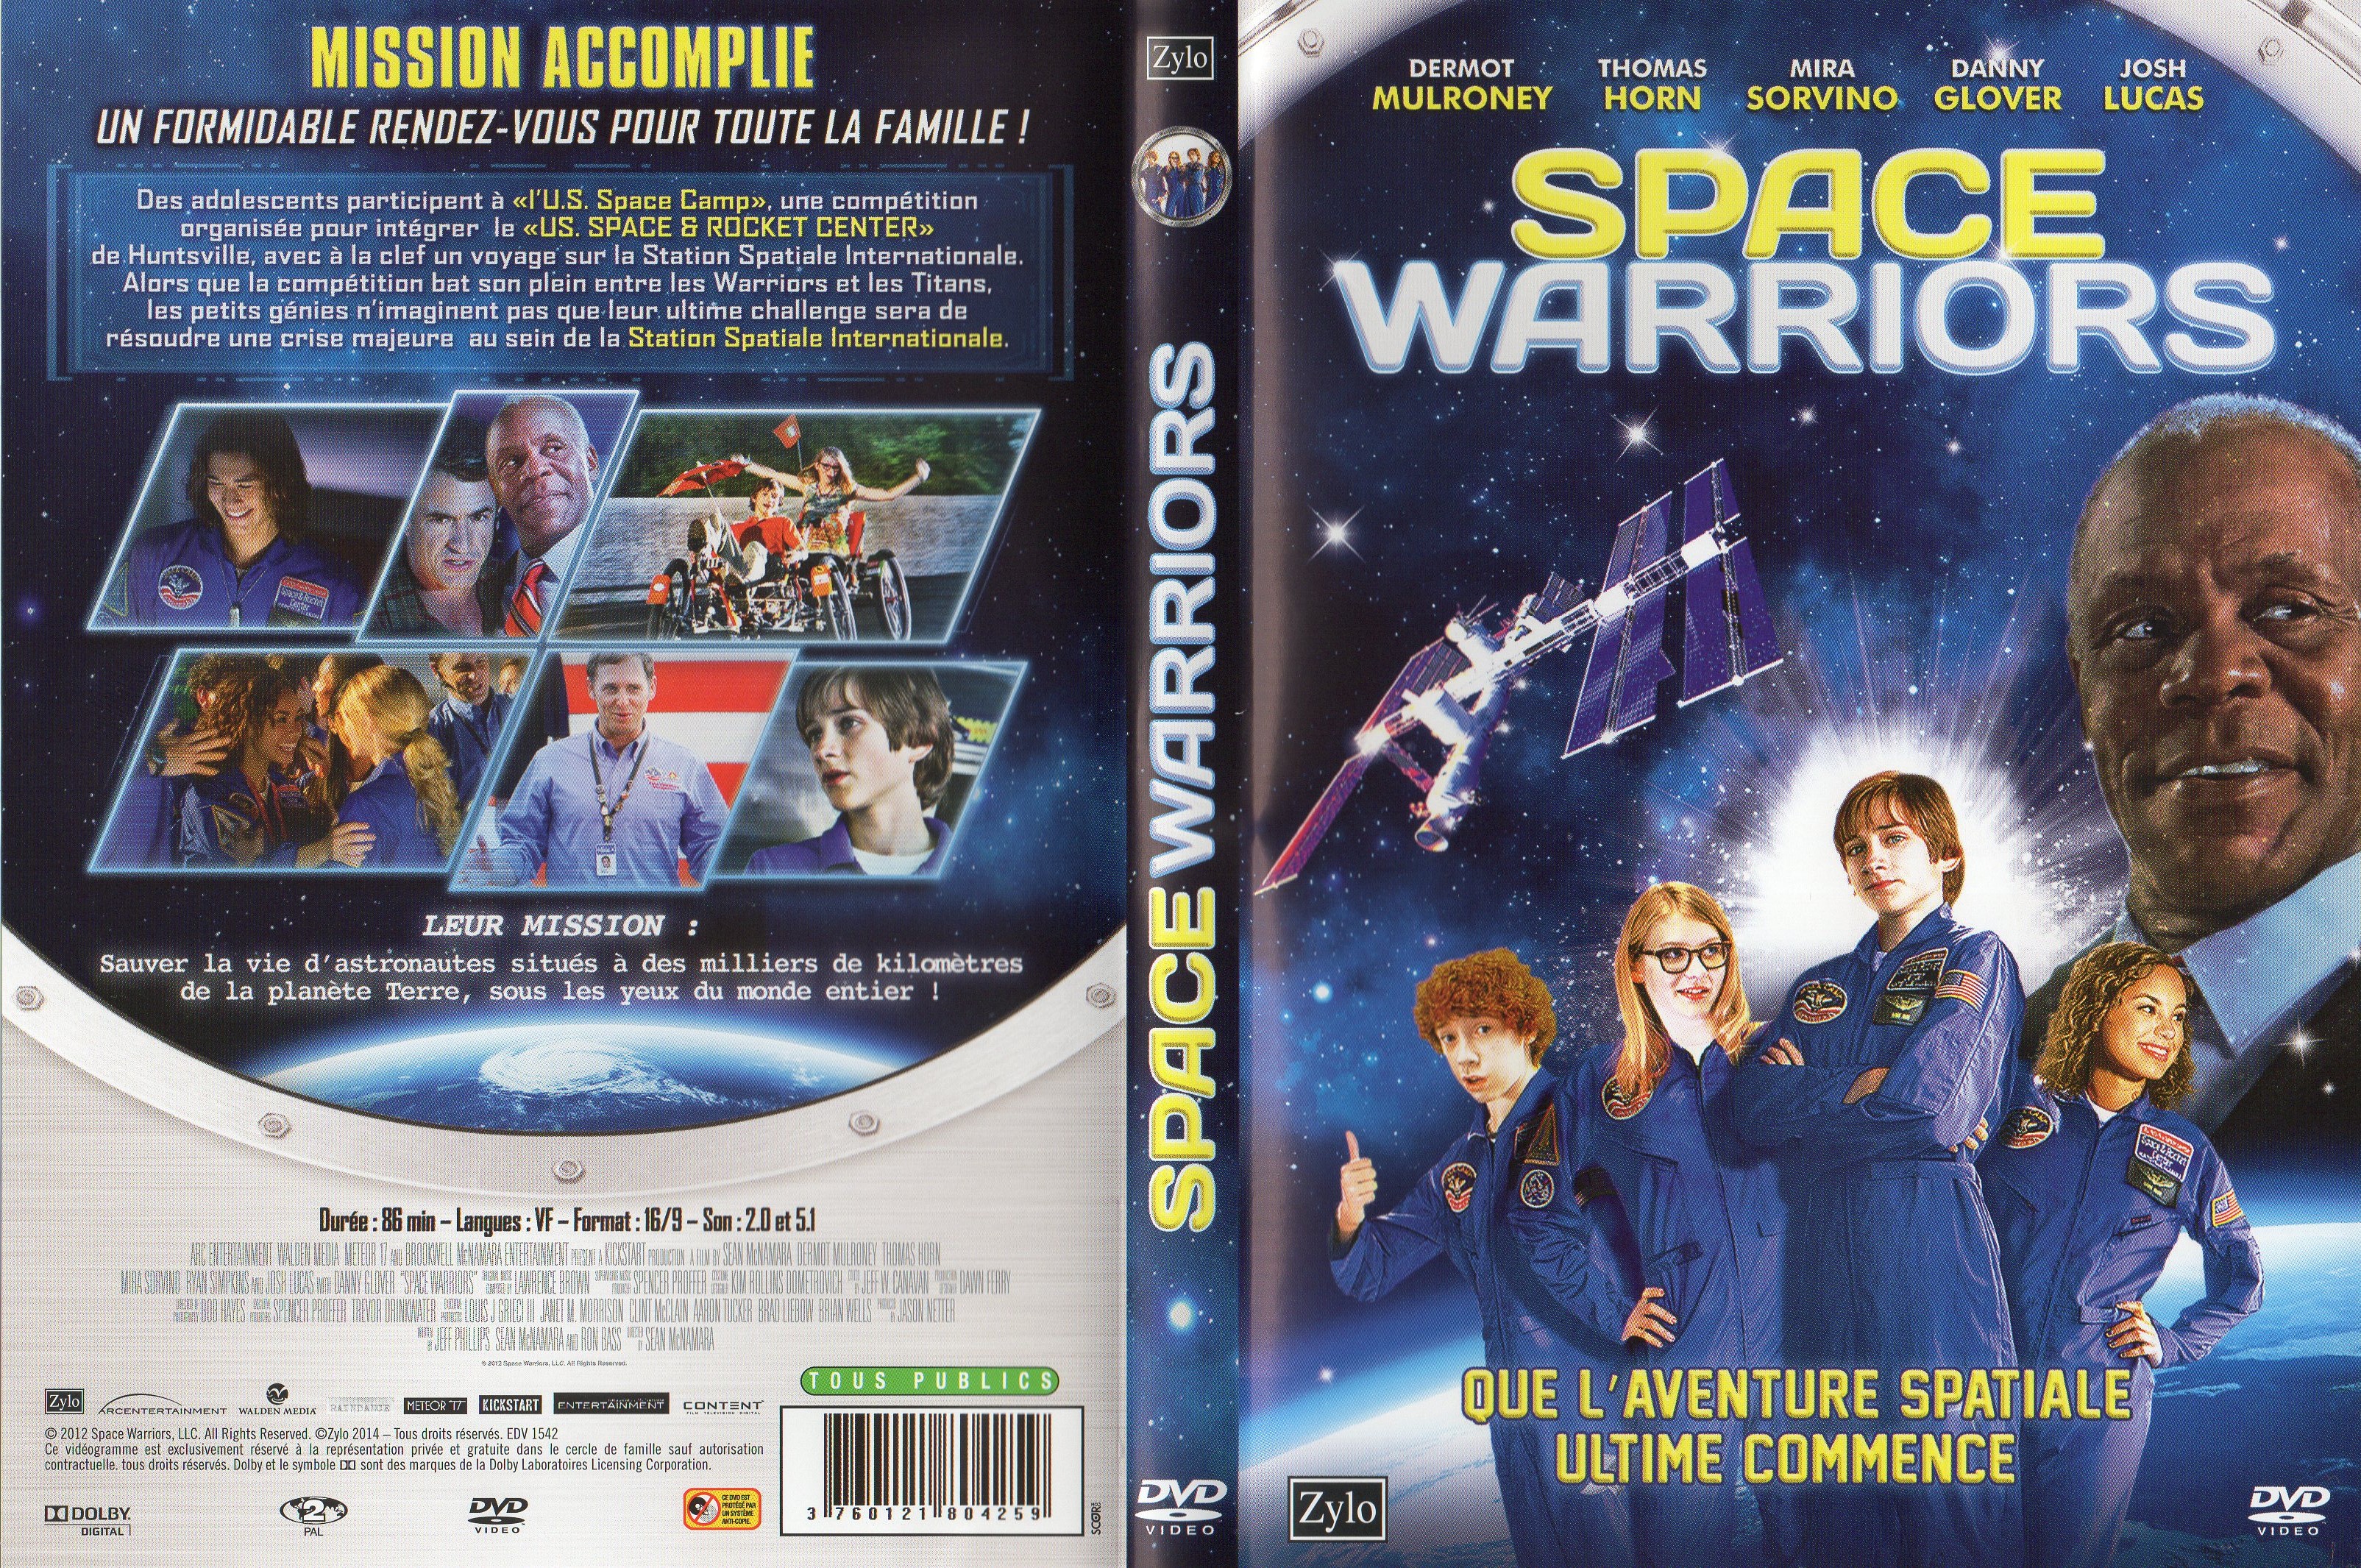 Jaquette DVD Space warriors